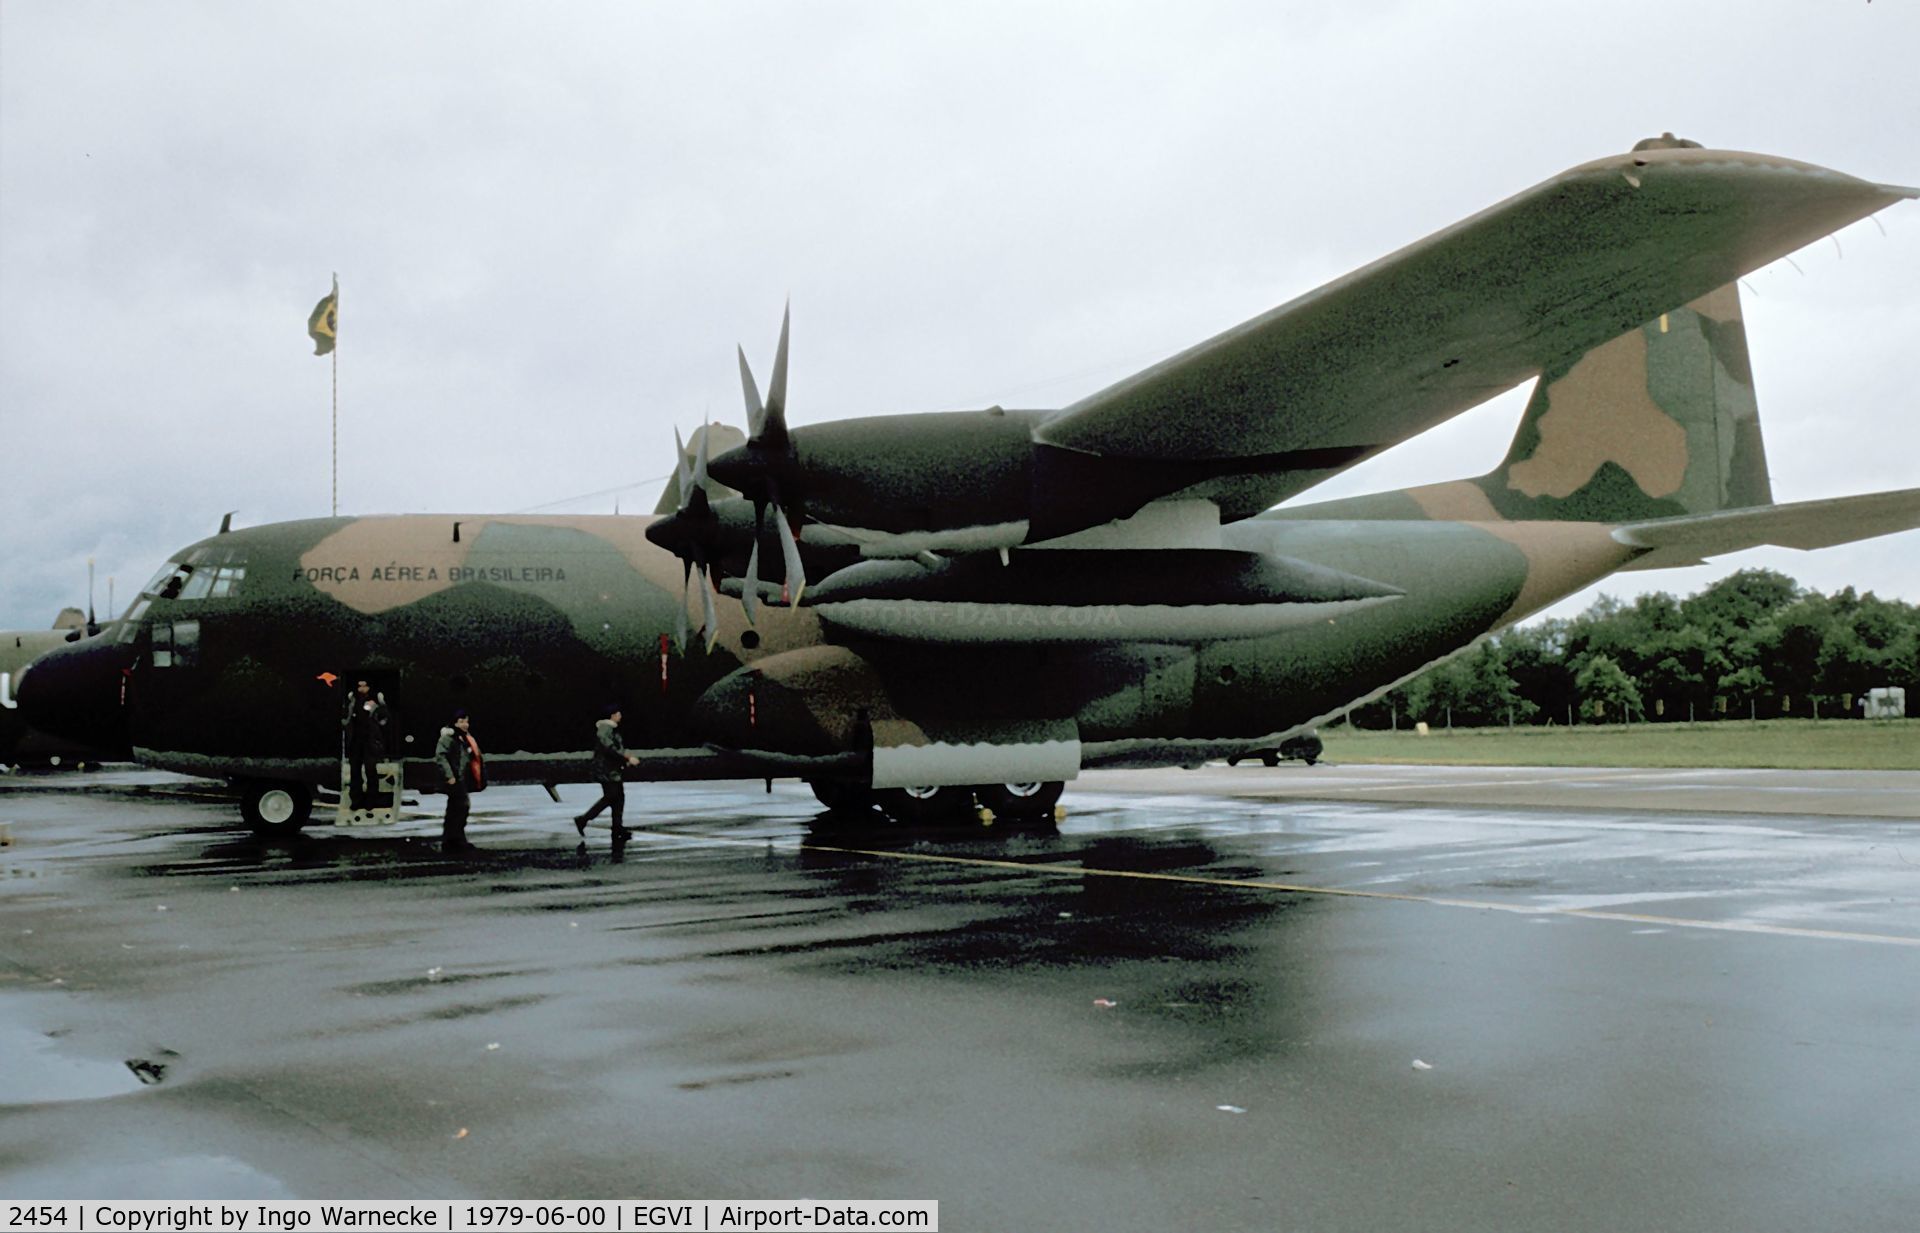 2454, Lockheed C-130E Hercules C/N 382-4114, Lockheed C-130E Hercules of the Forca Aerea Brasileira at the 1979 International Air Tattoo, Greenham Common